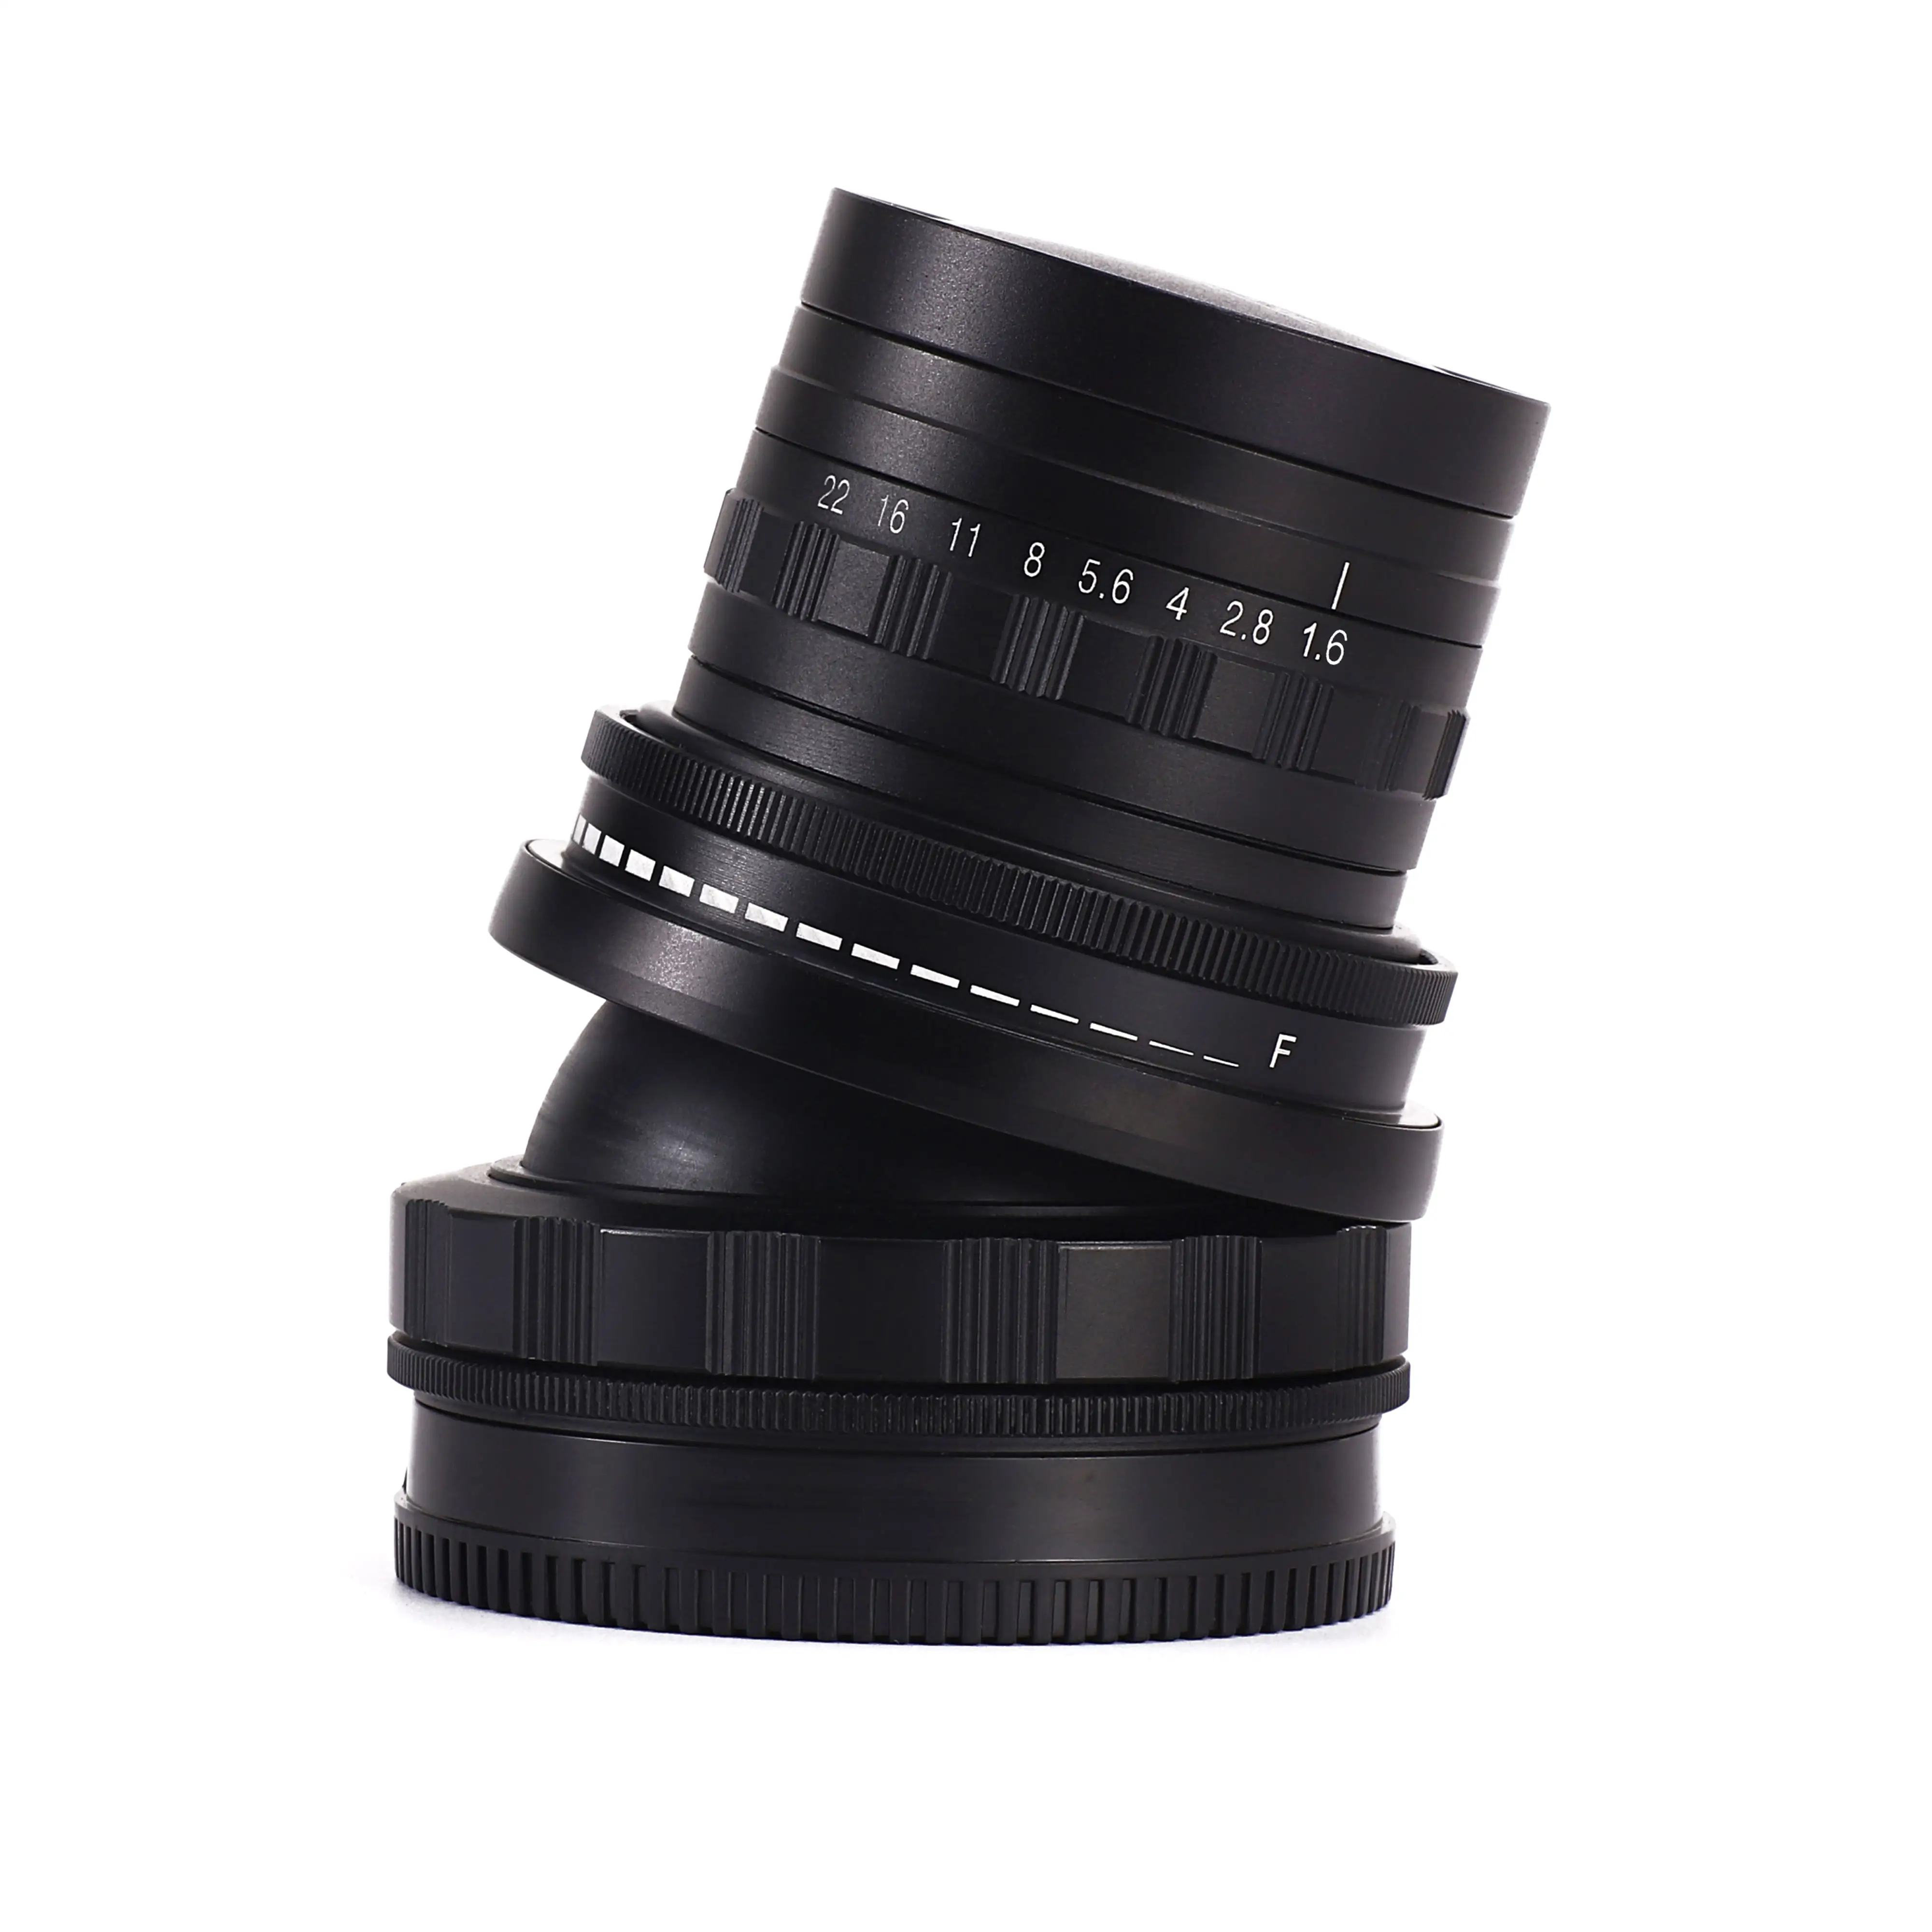 Tilt Lens F1.6 Large Aperture Full Frame Manual 2-in-1 Miniature Model Effect & Filter Slot Compatible with camera video Mount